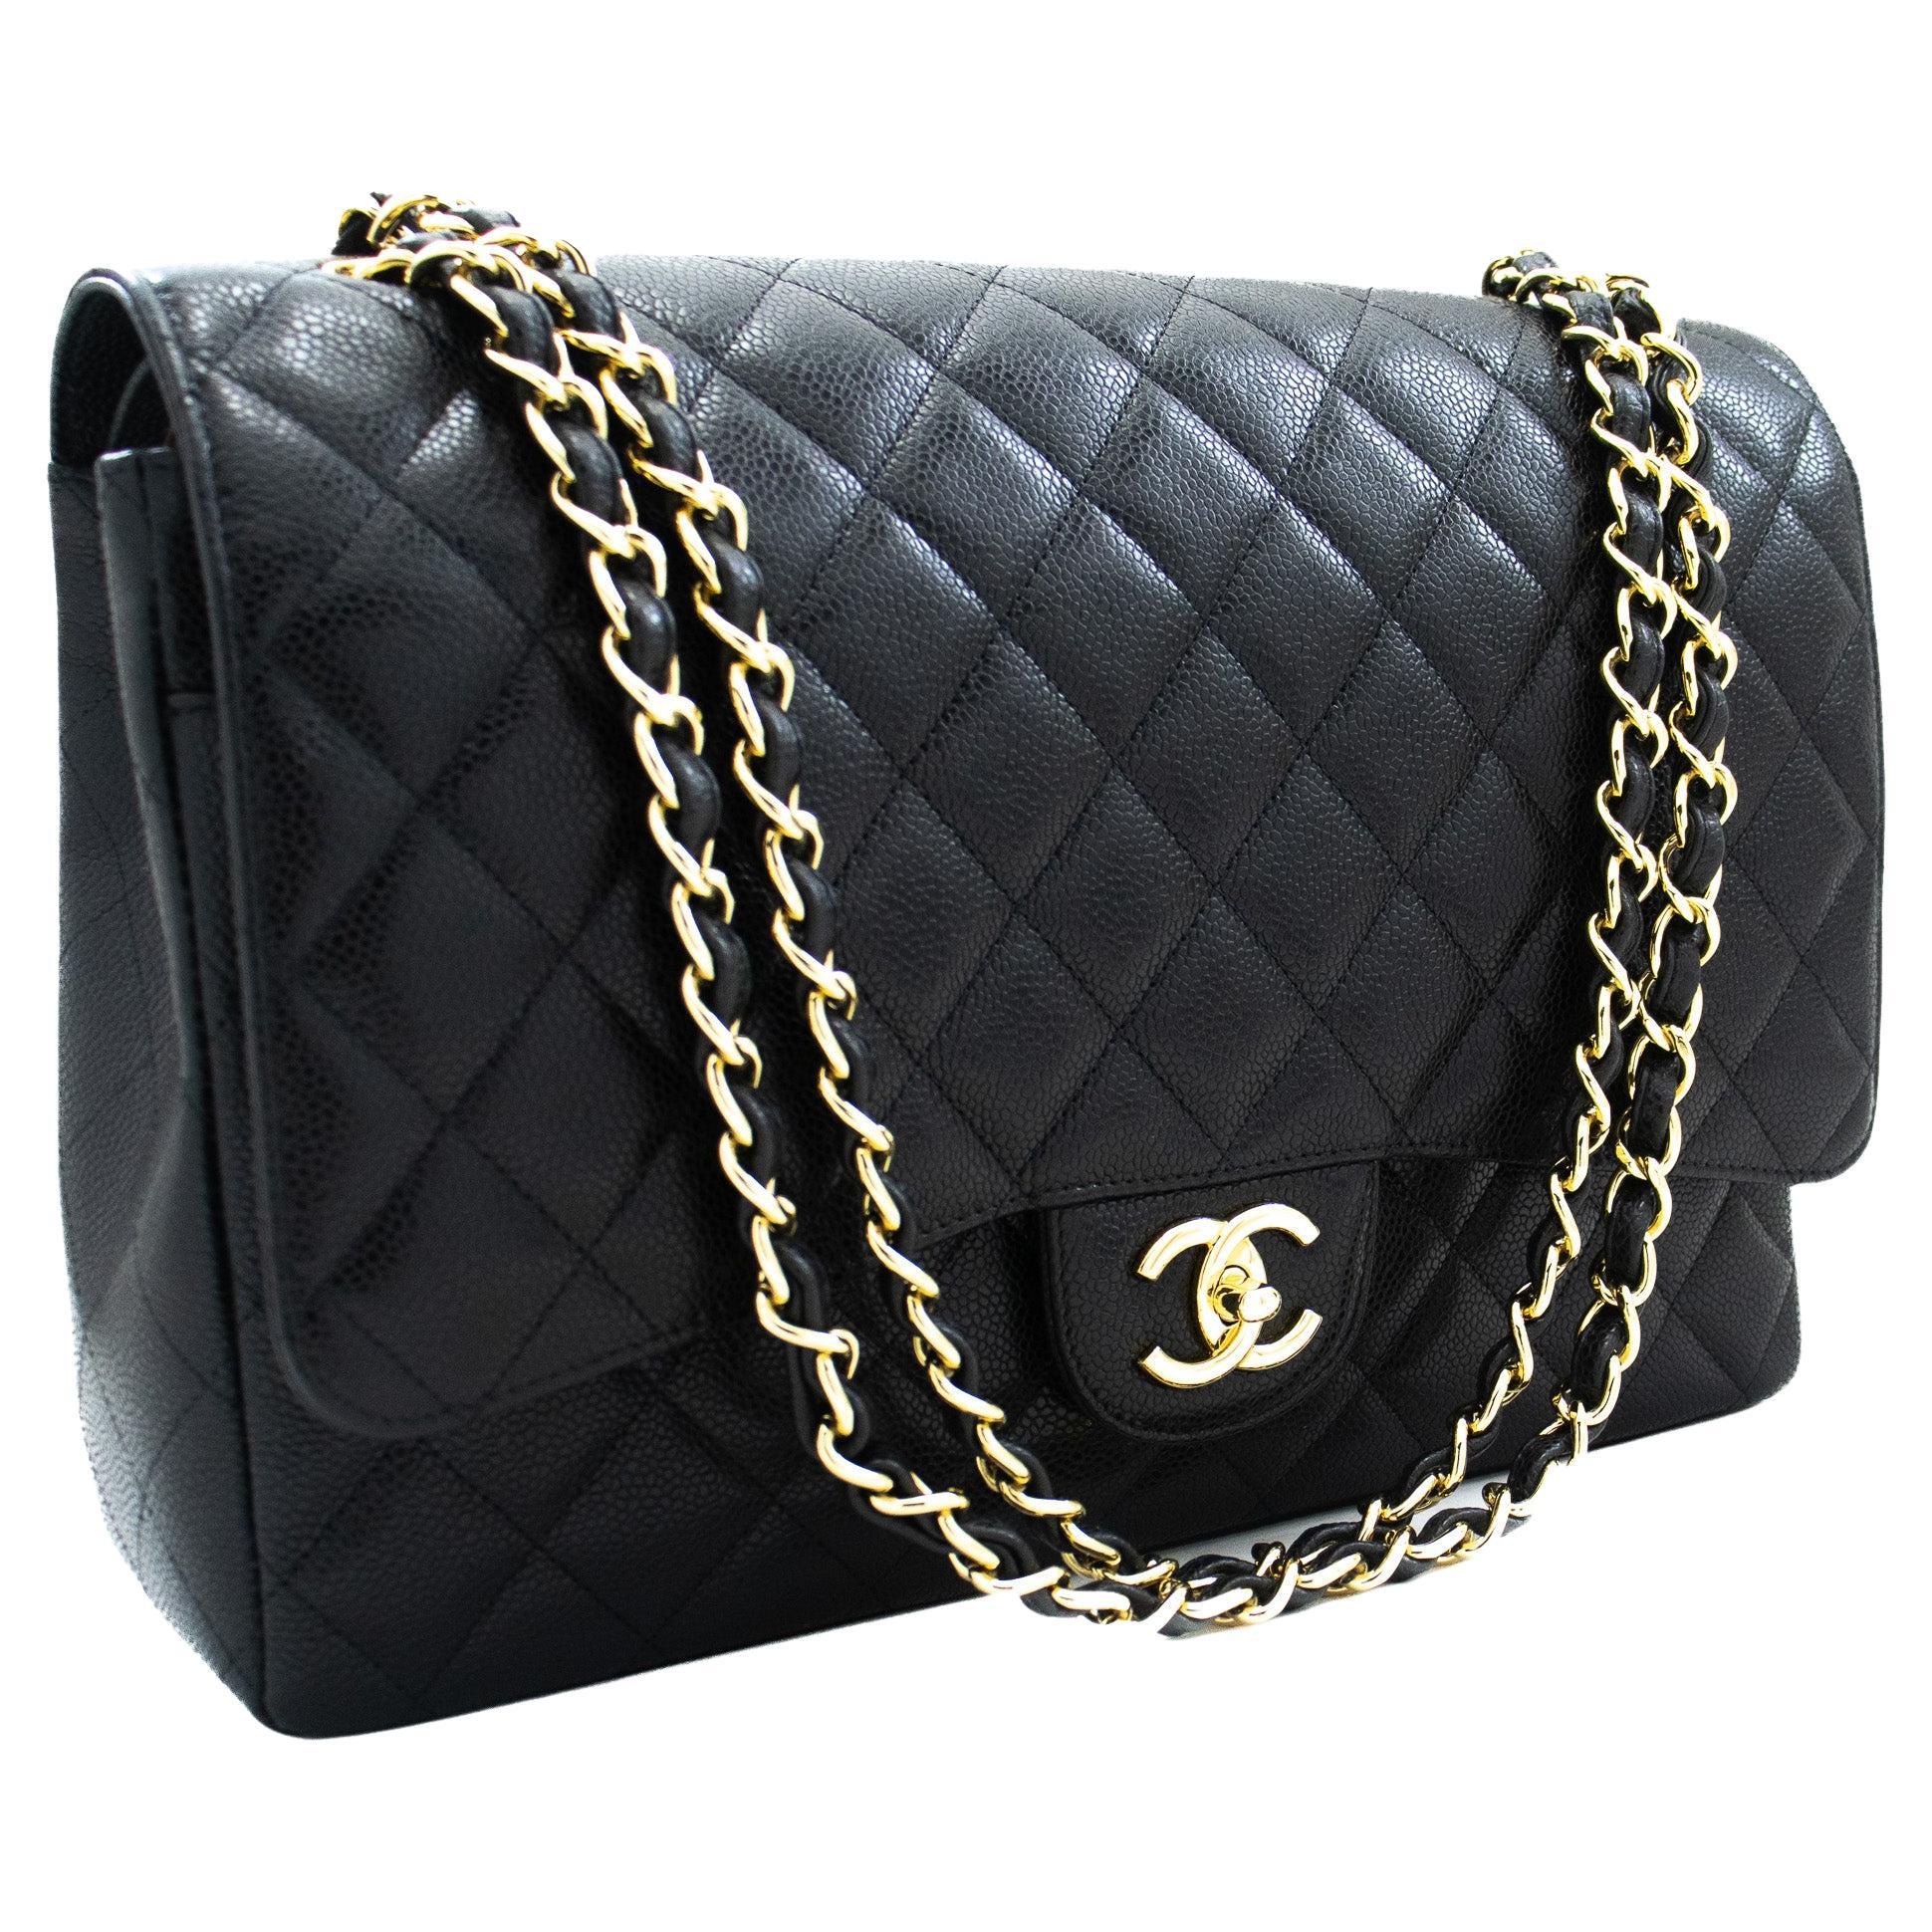 CHANEL Maxi Classic Handbag Grained Calfskin Double Chain Flap Shoulder Bag For Sale